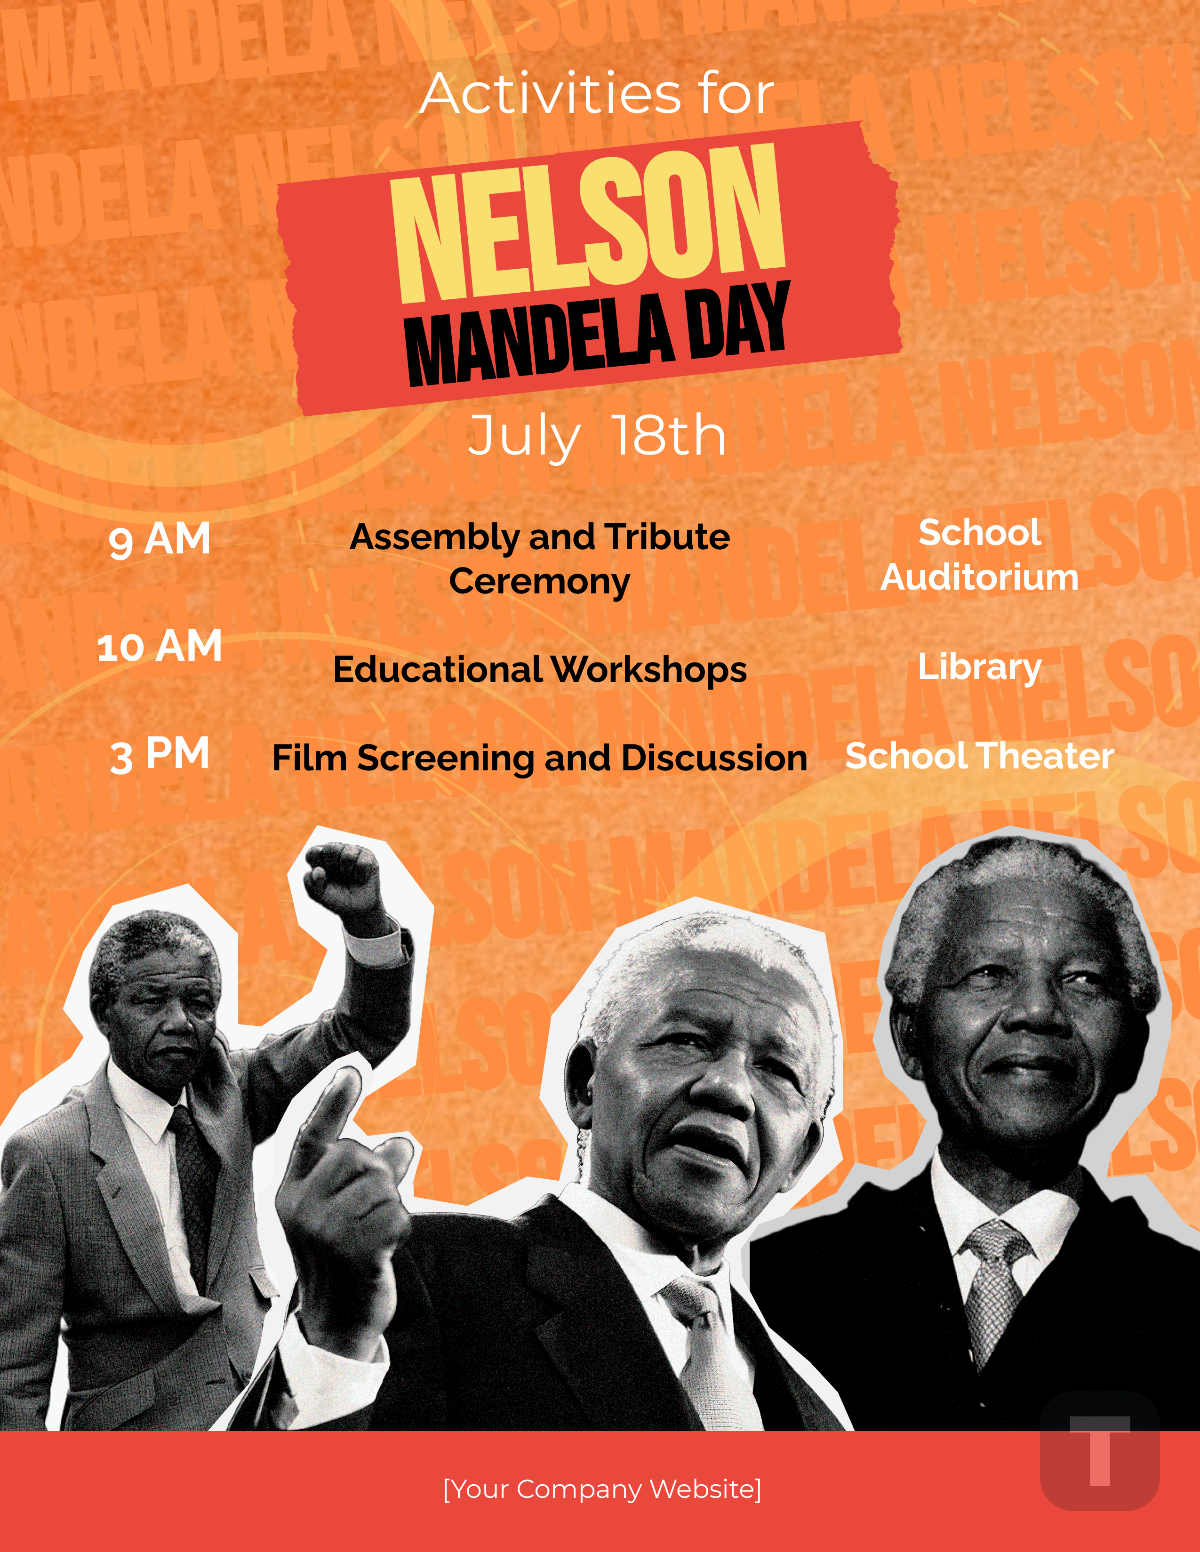 Nelson Mandela Day Activities